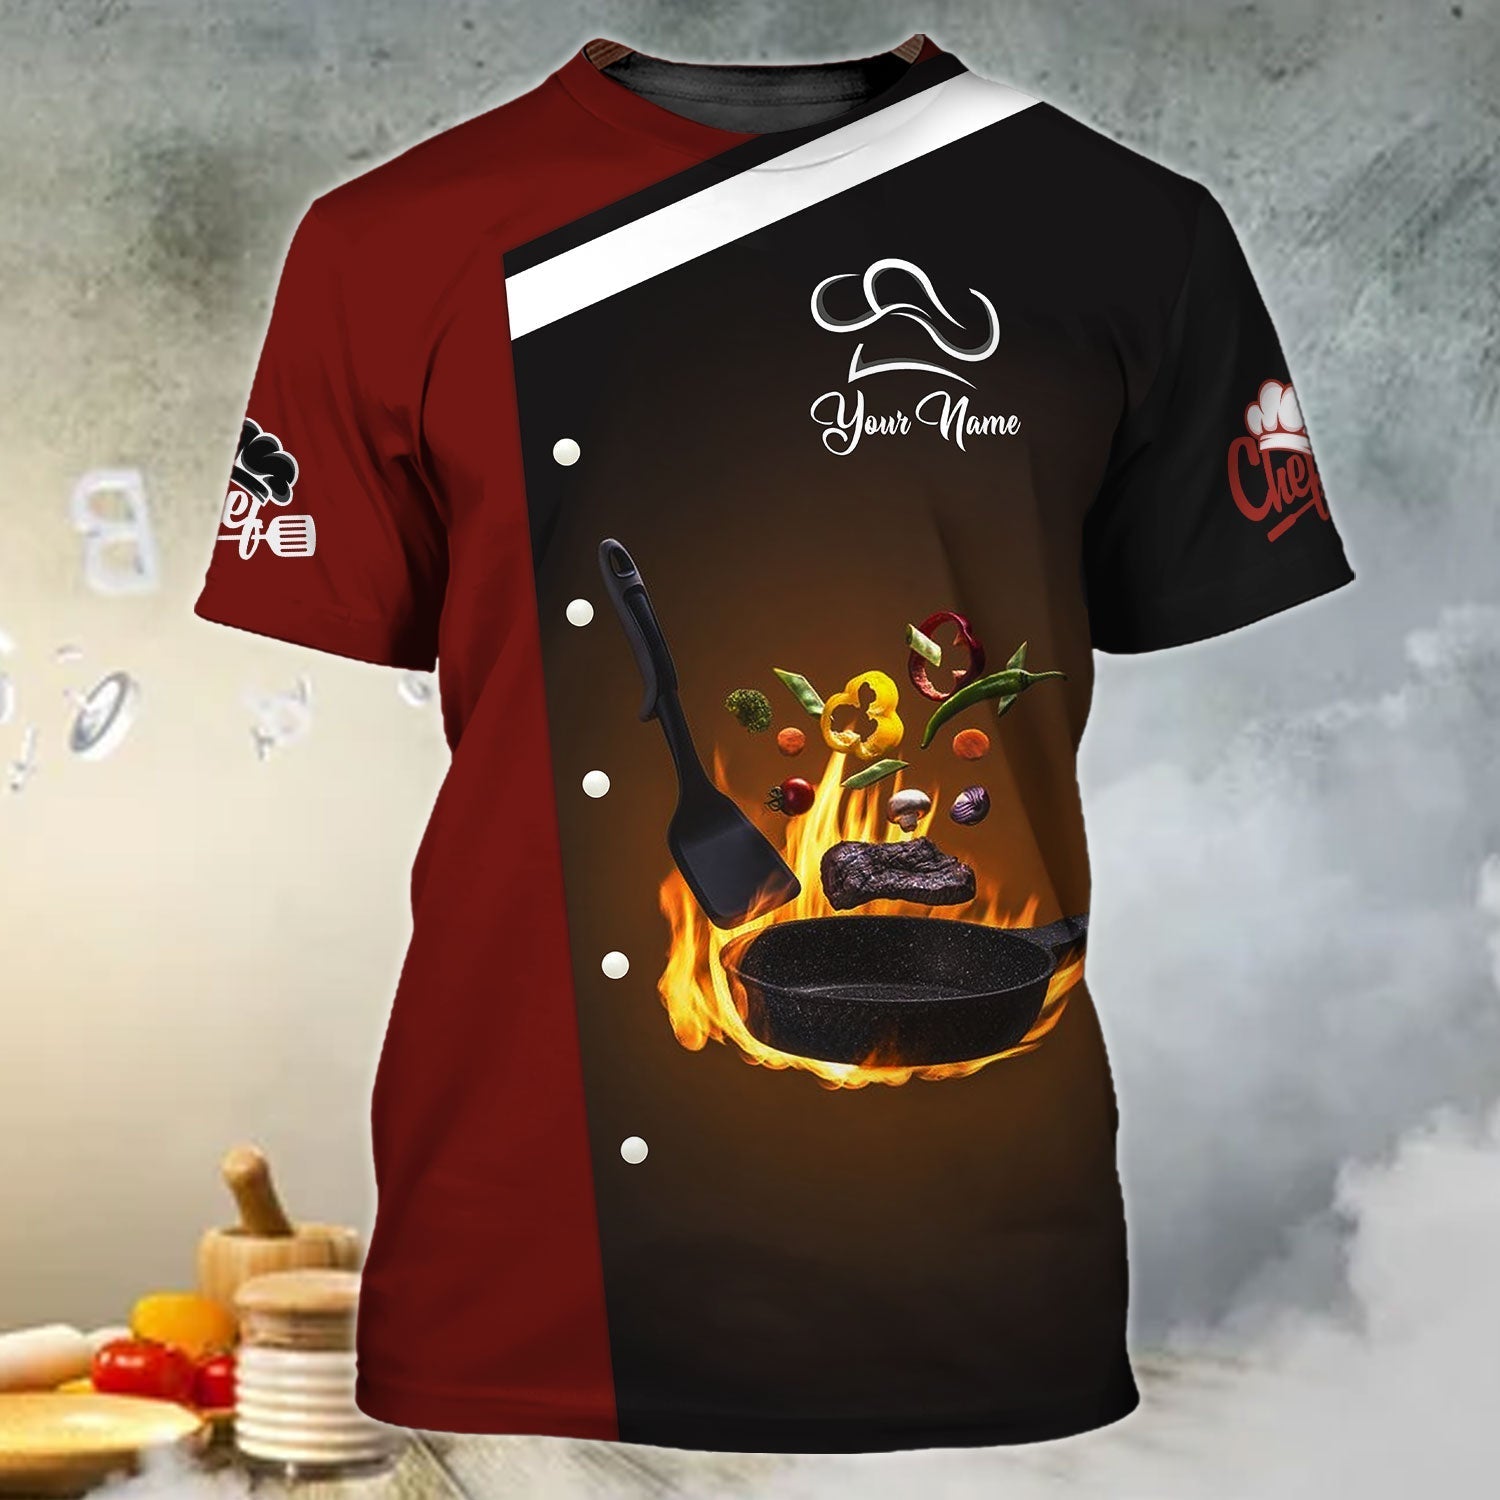 Unisex Shirt - Custom Chef Name T-Shirt, Kitchen Fire Shirt